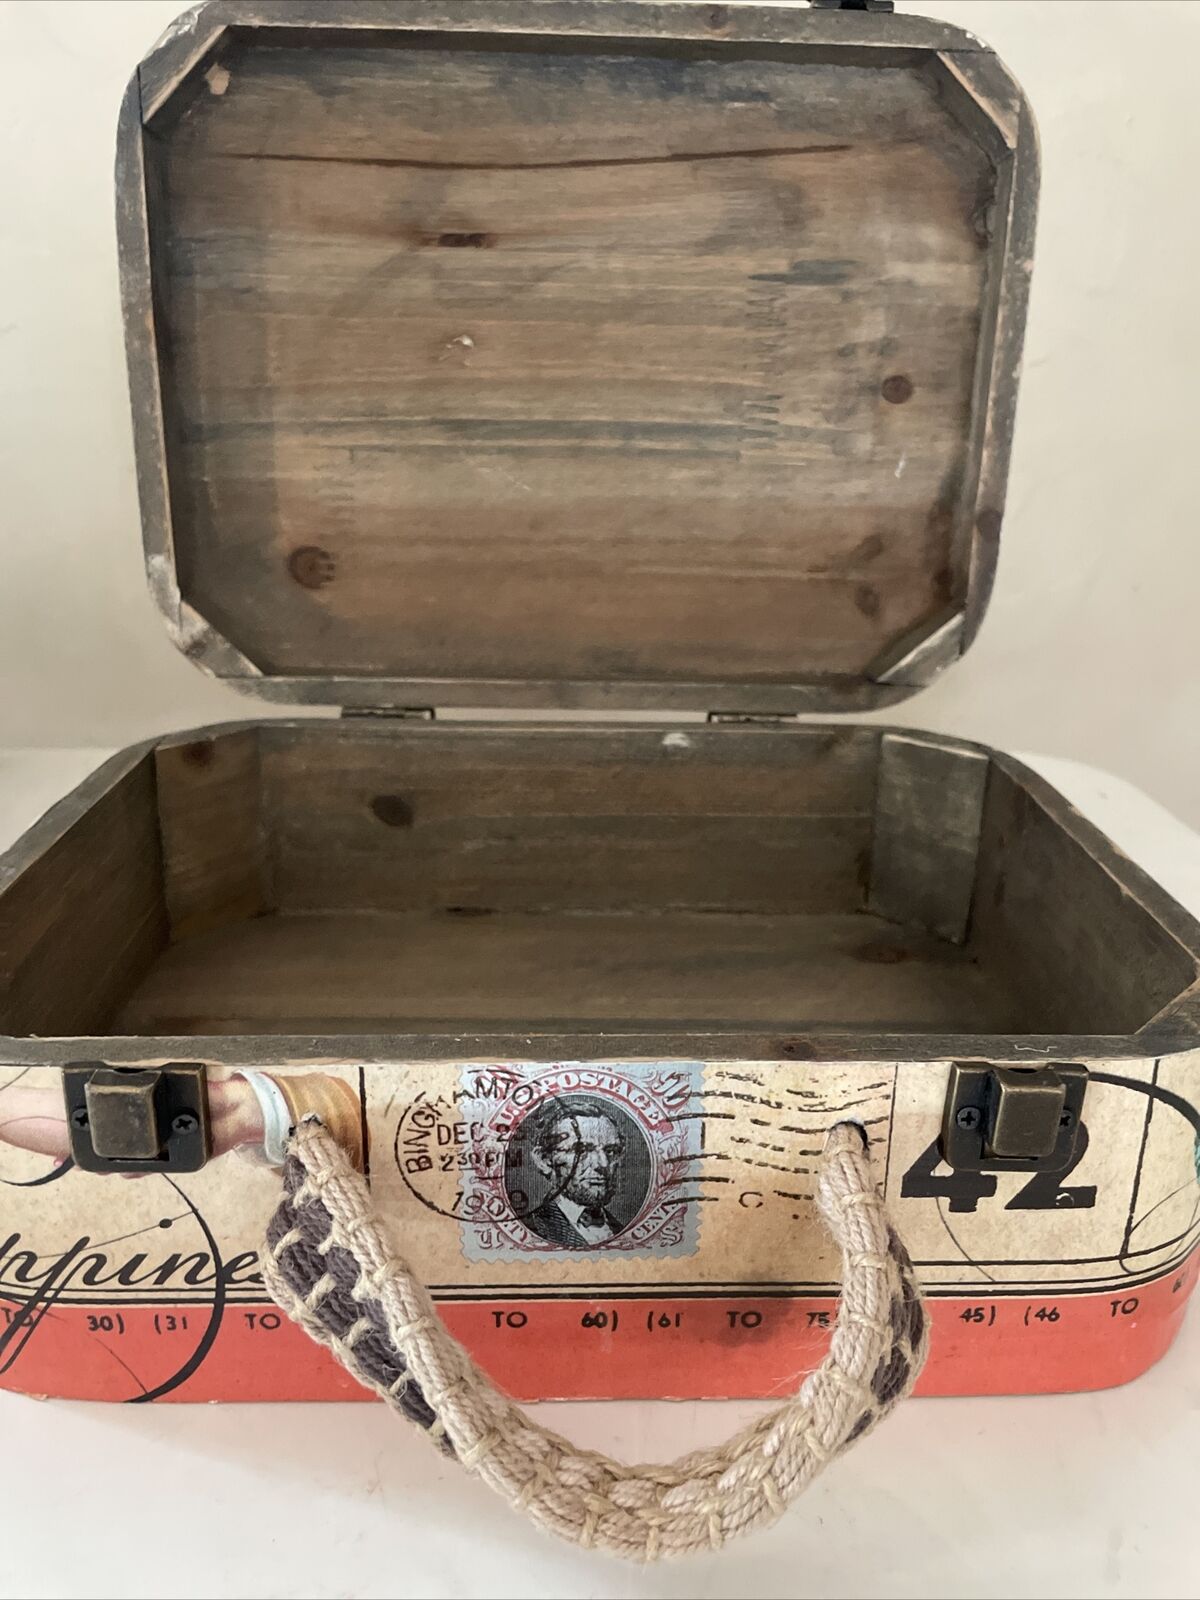 December 23, 1909 Keepsake Suitcase Box